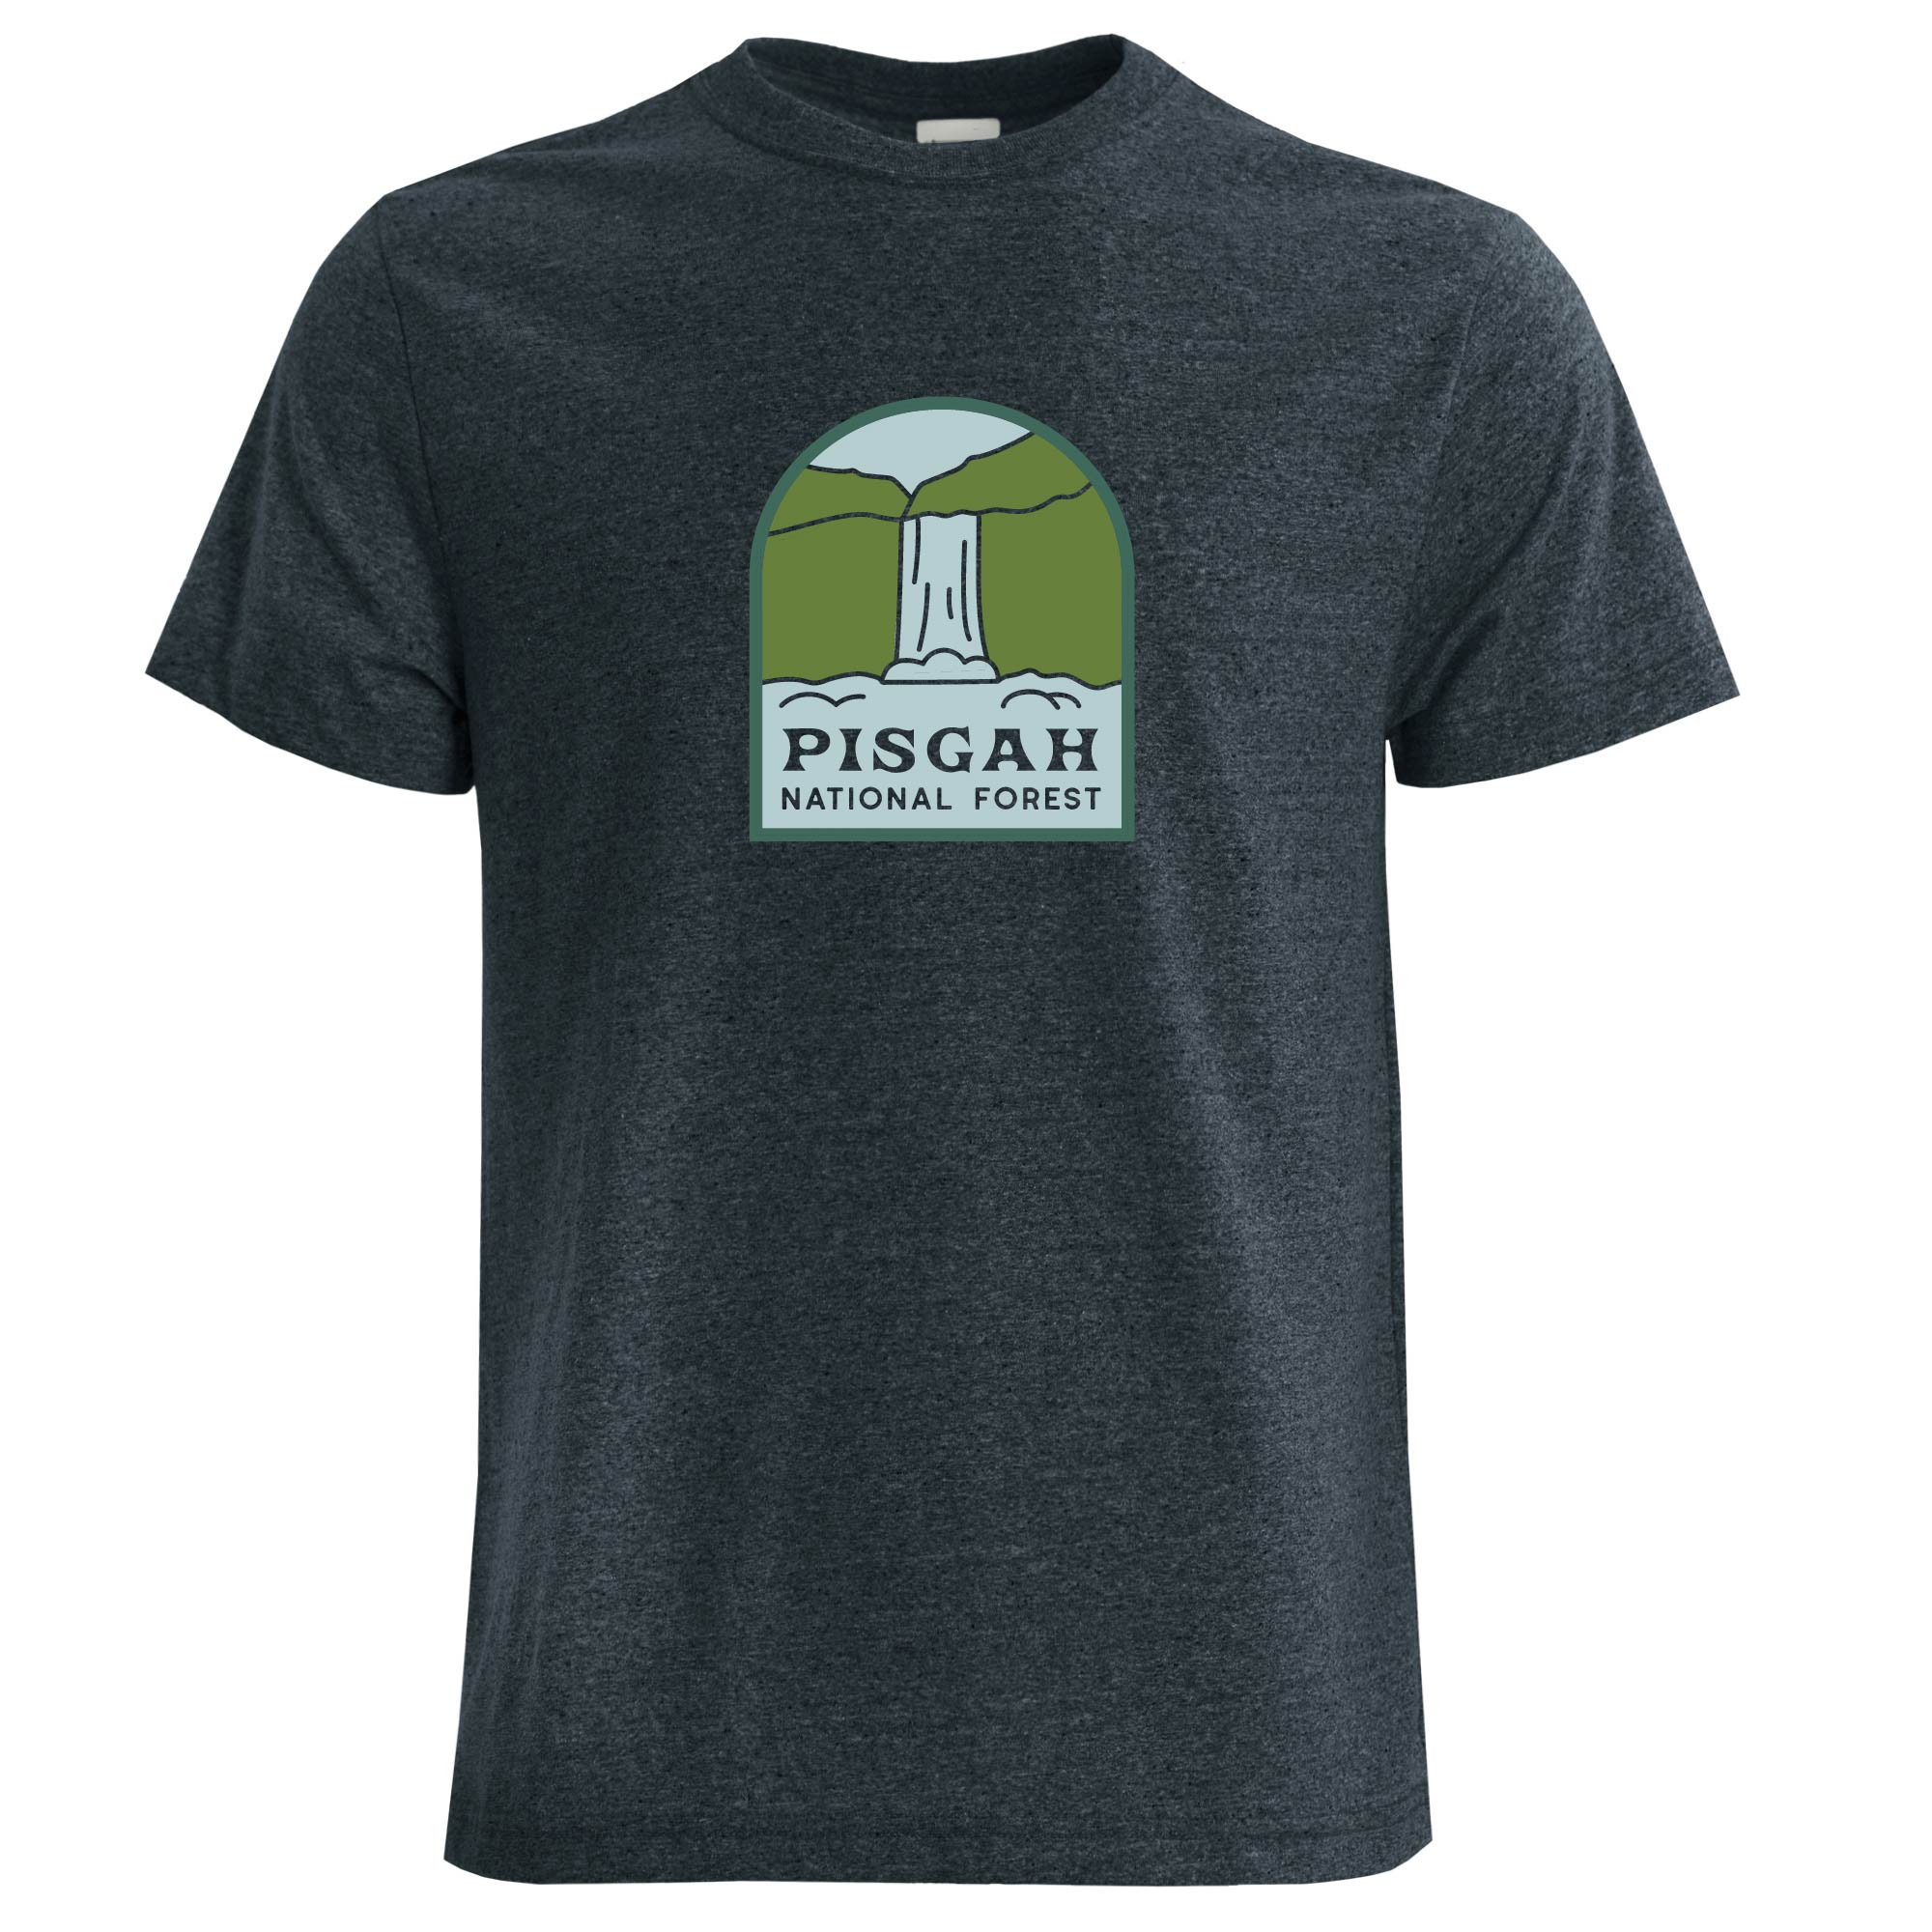 RS100 - Pisgah National Forest Short Sleeve T-Shirt